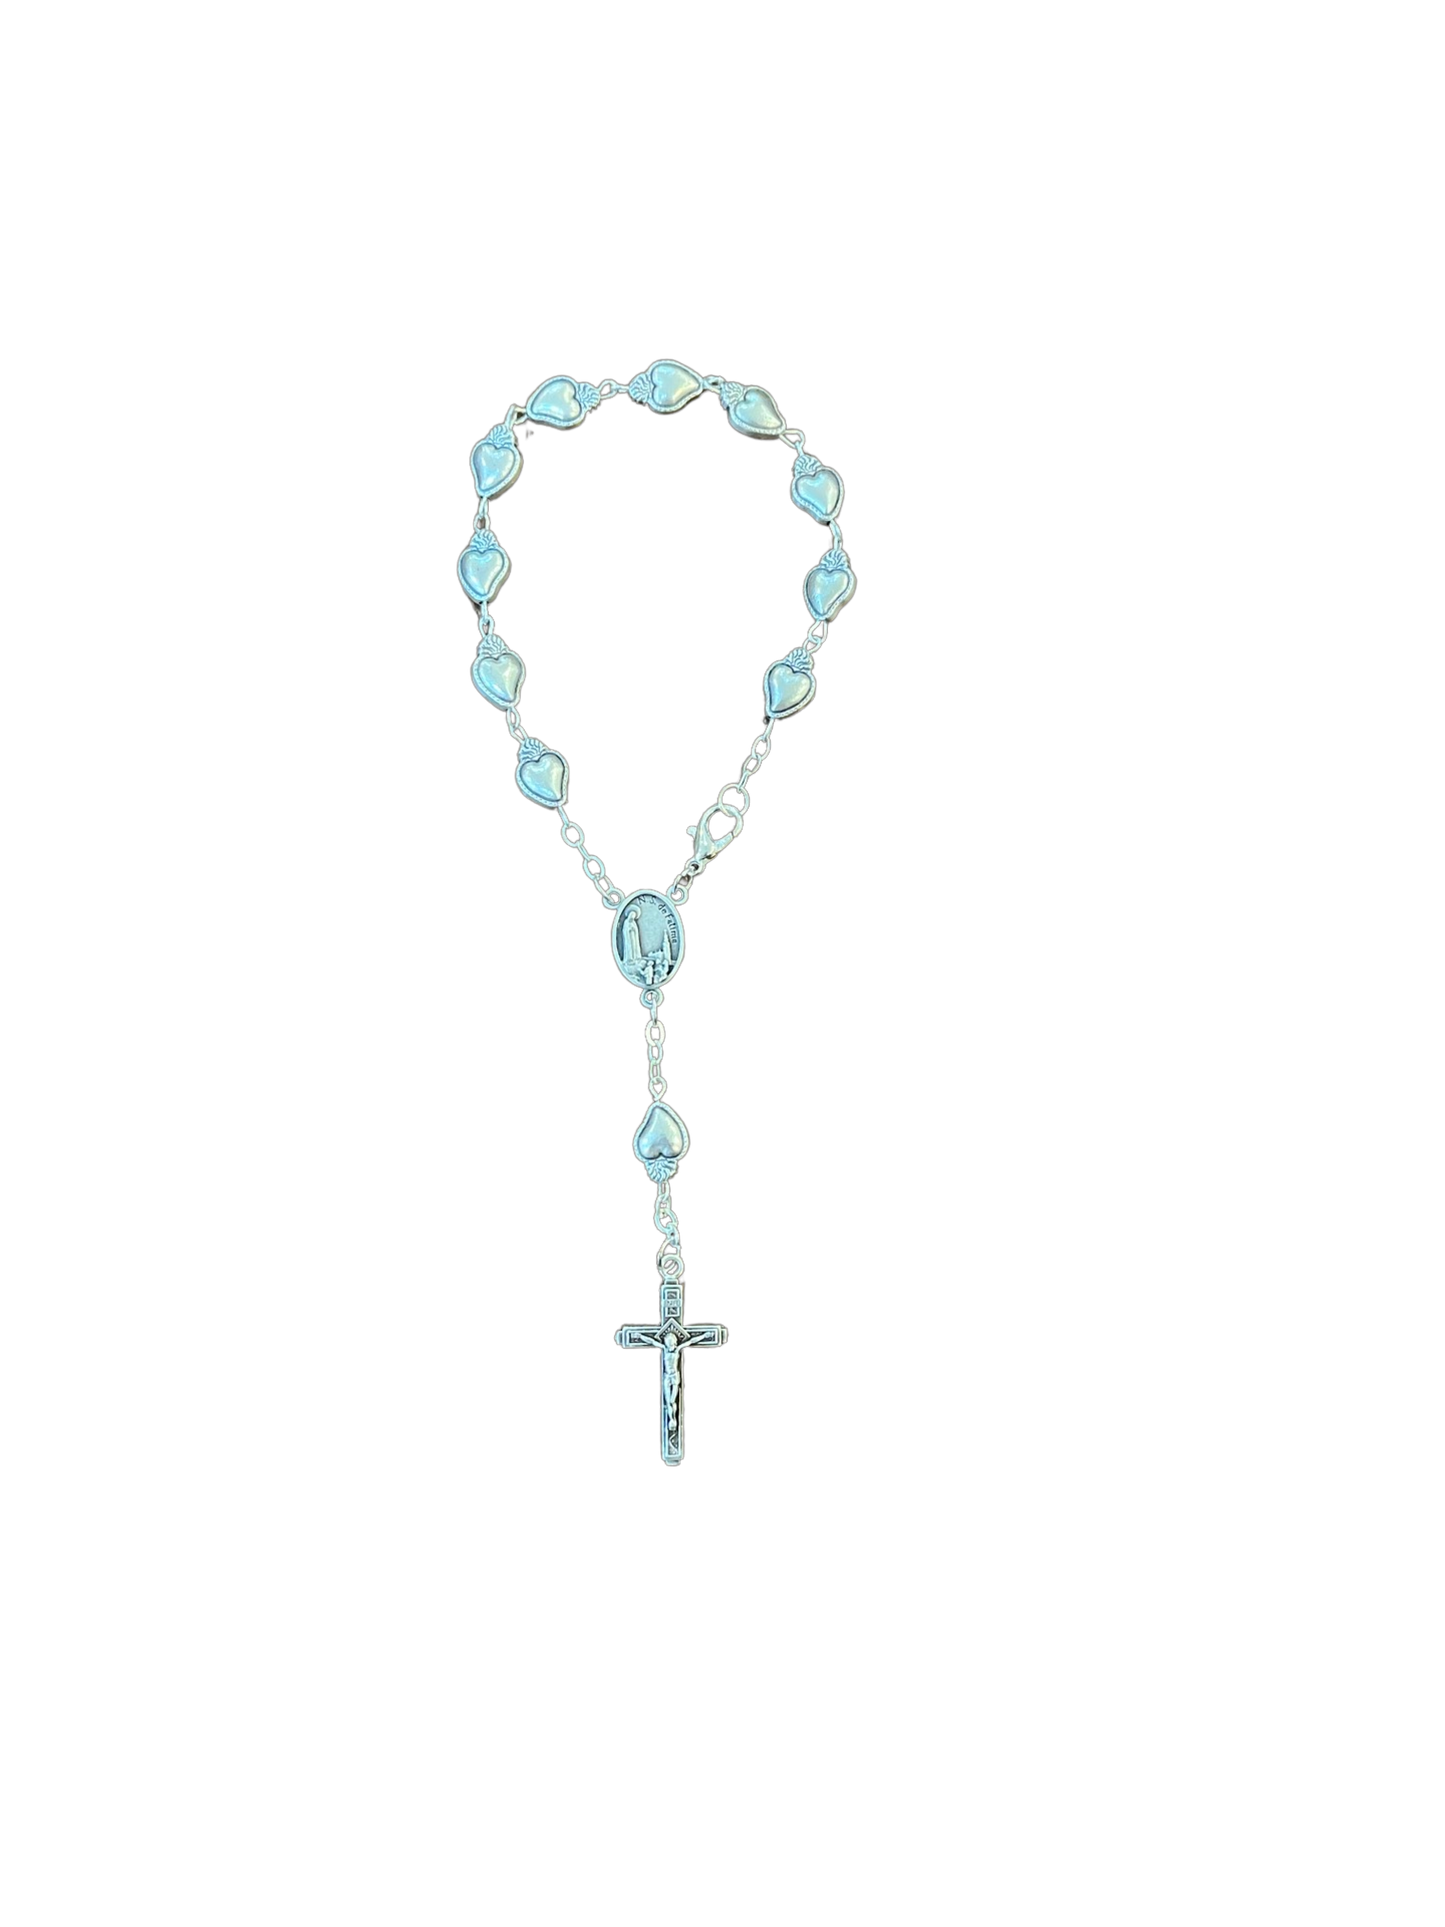 Fatima Decade Rosary with Heart Beads